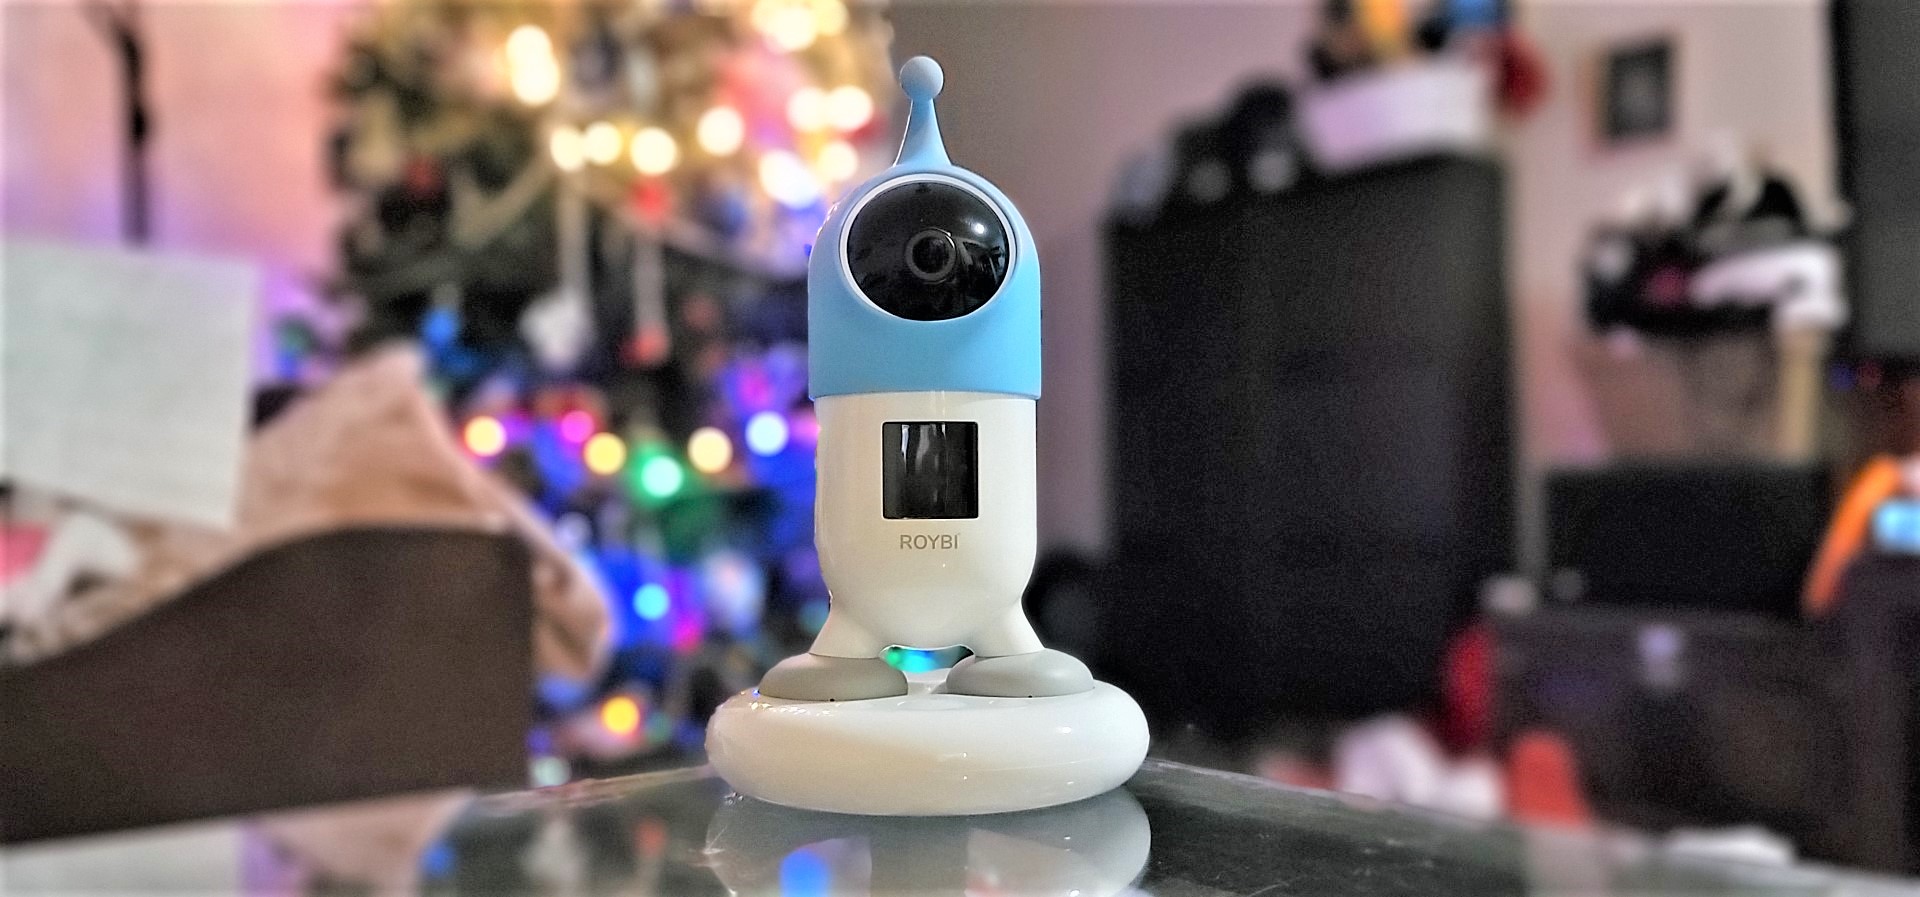 Roybi Robot in front of Christmas tree